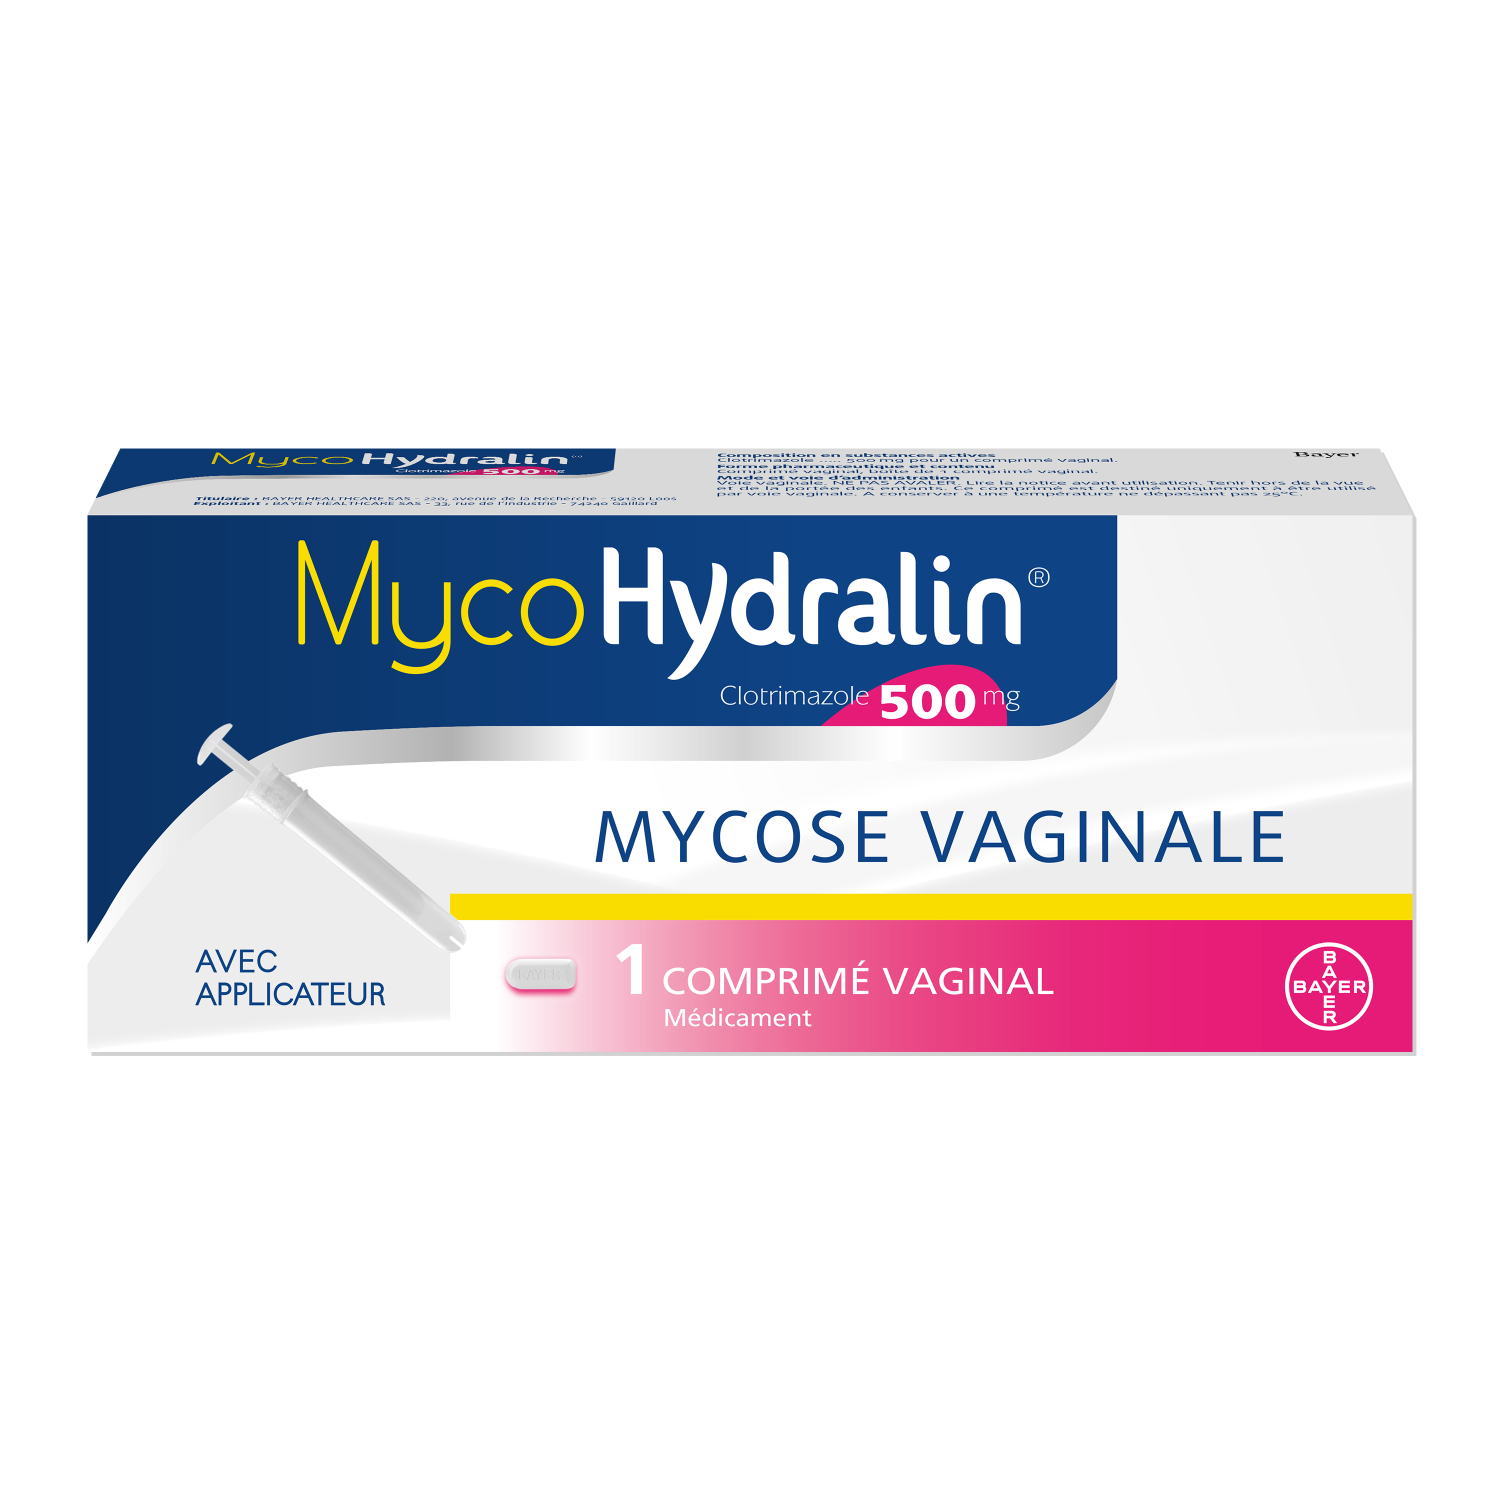 Mycohydralin 200 mg - 3 comprimés vaginaux